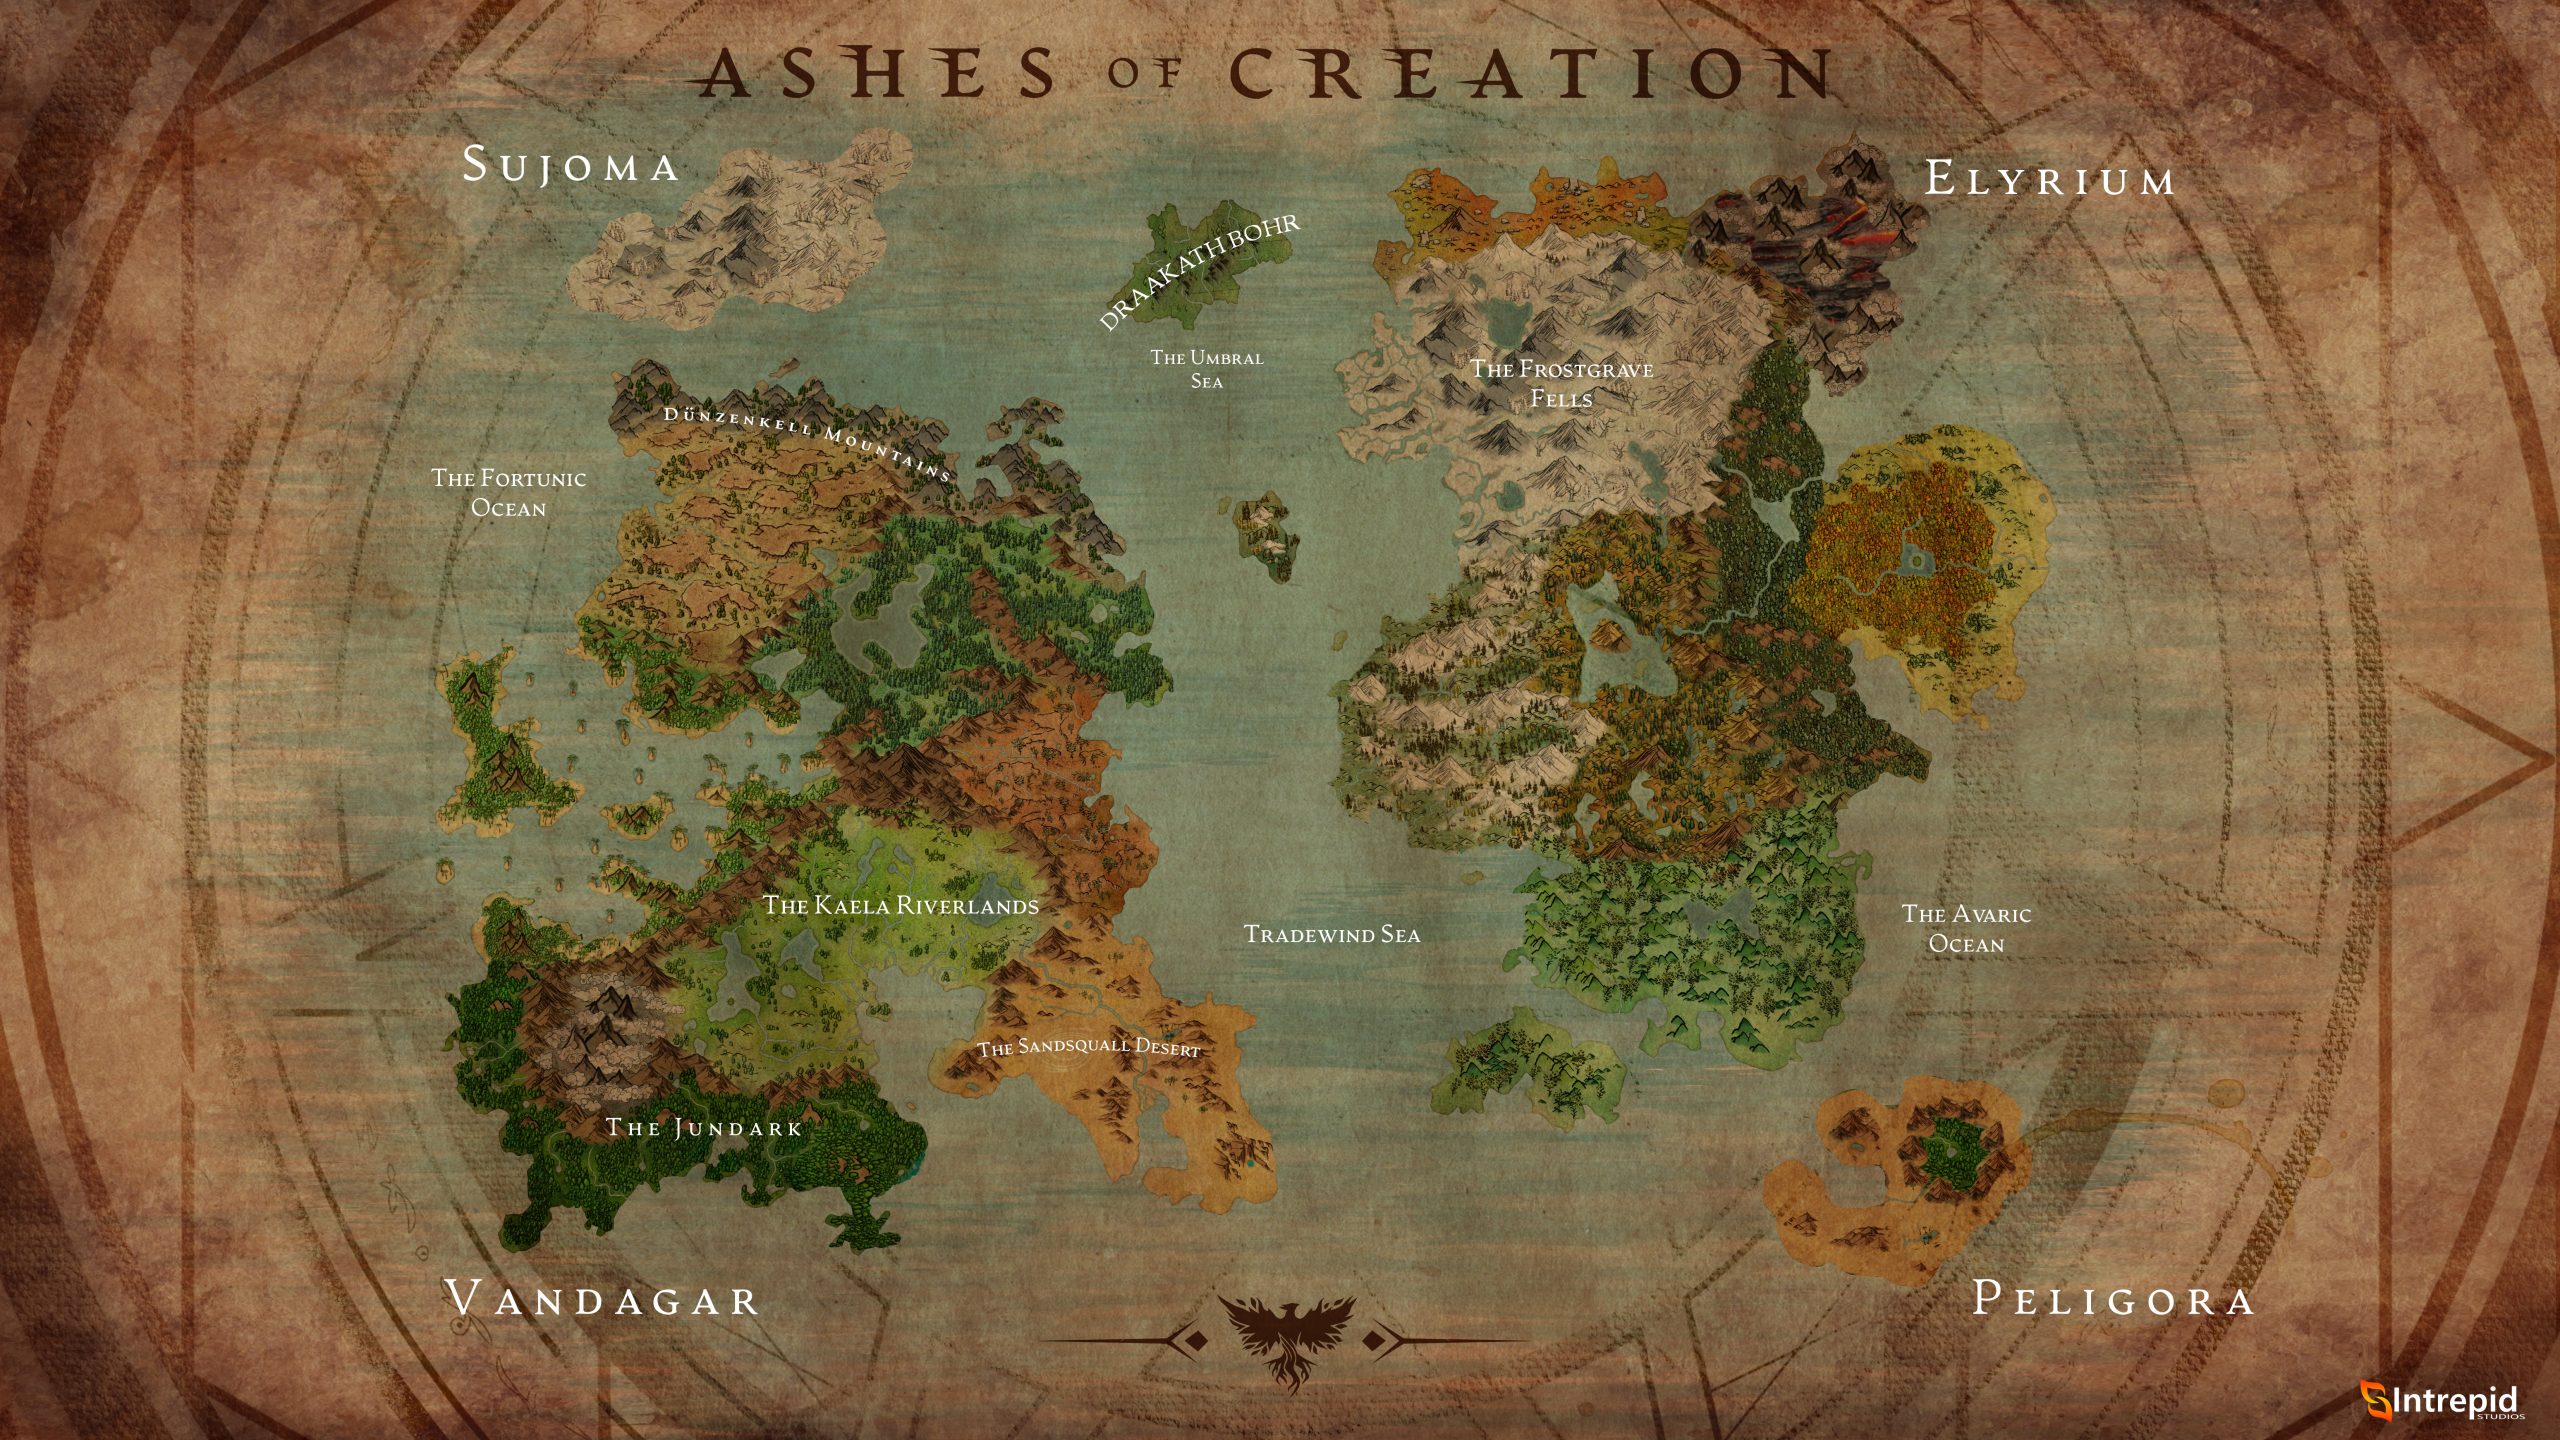 mapa de verra tamaño real 1.200km ashes of creation español foro comunidad hispana fansite